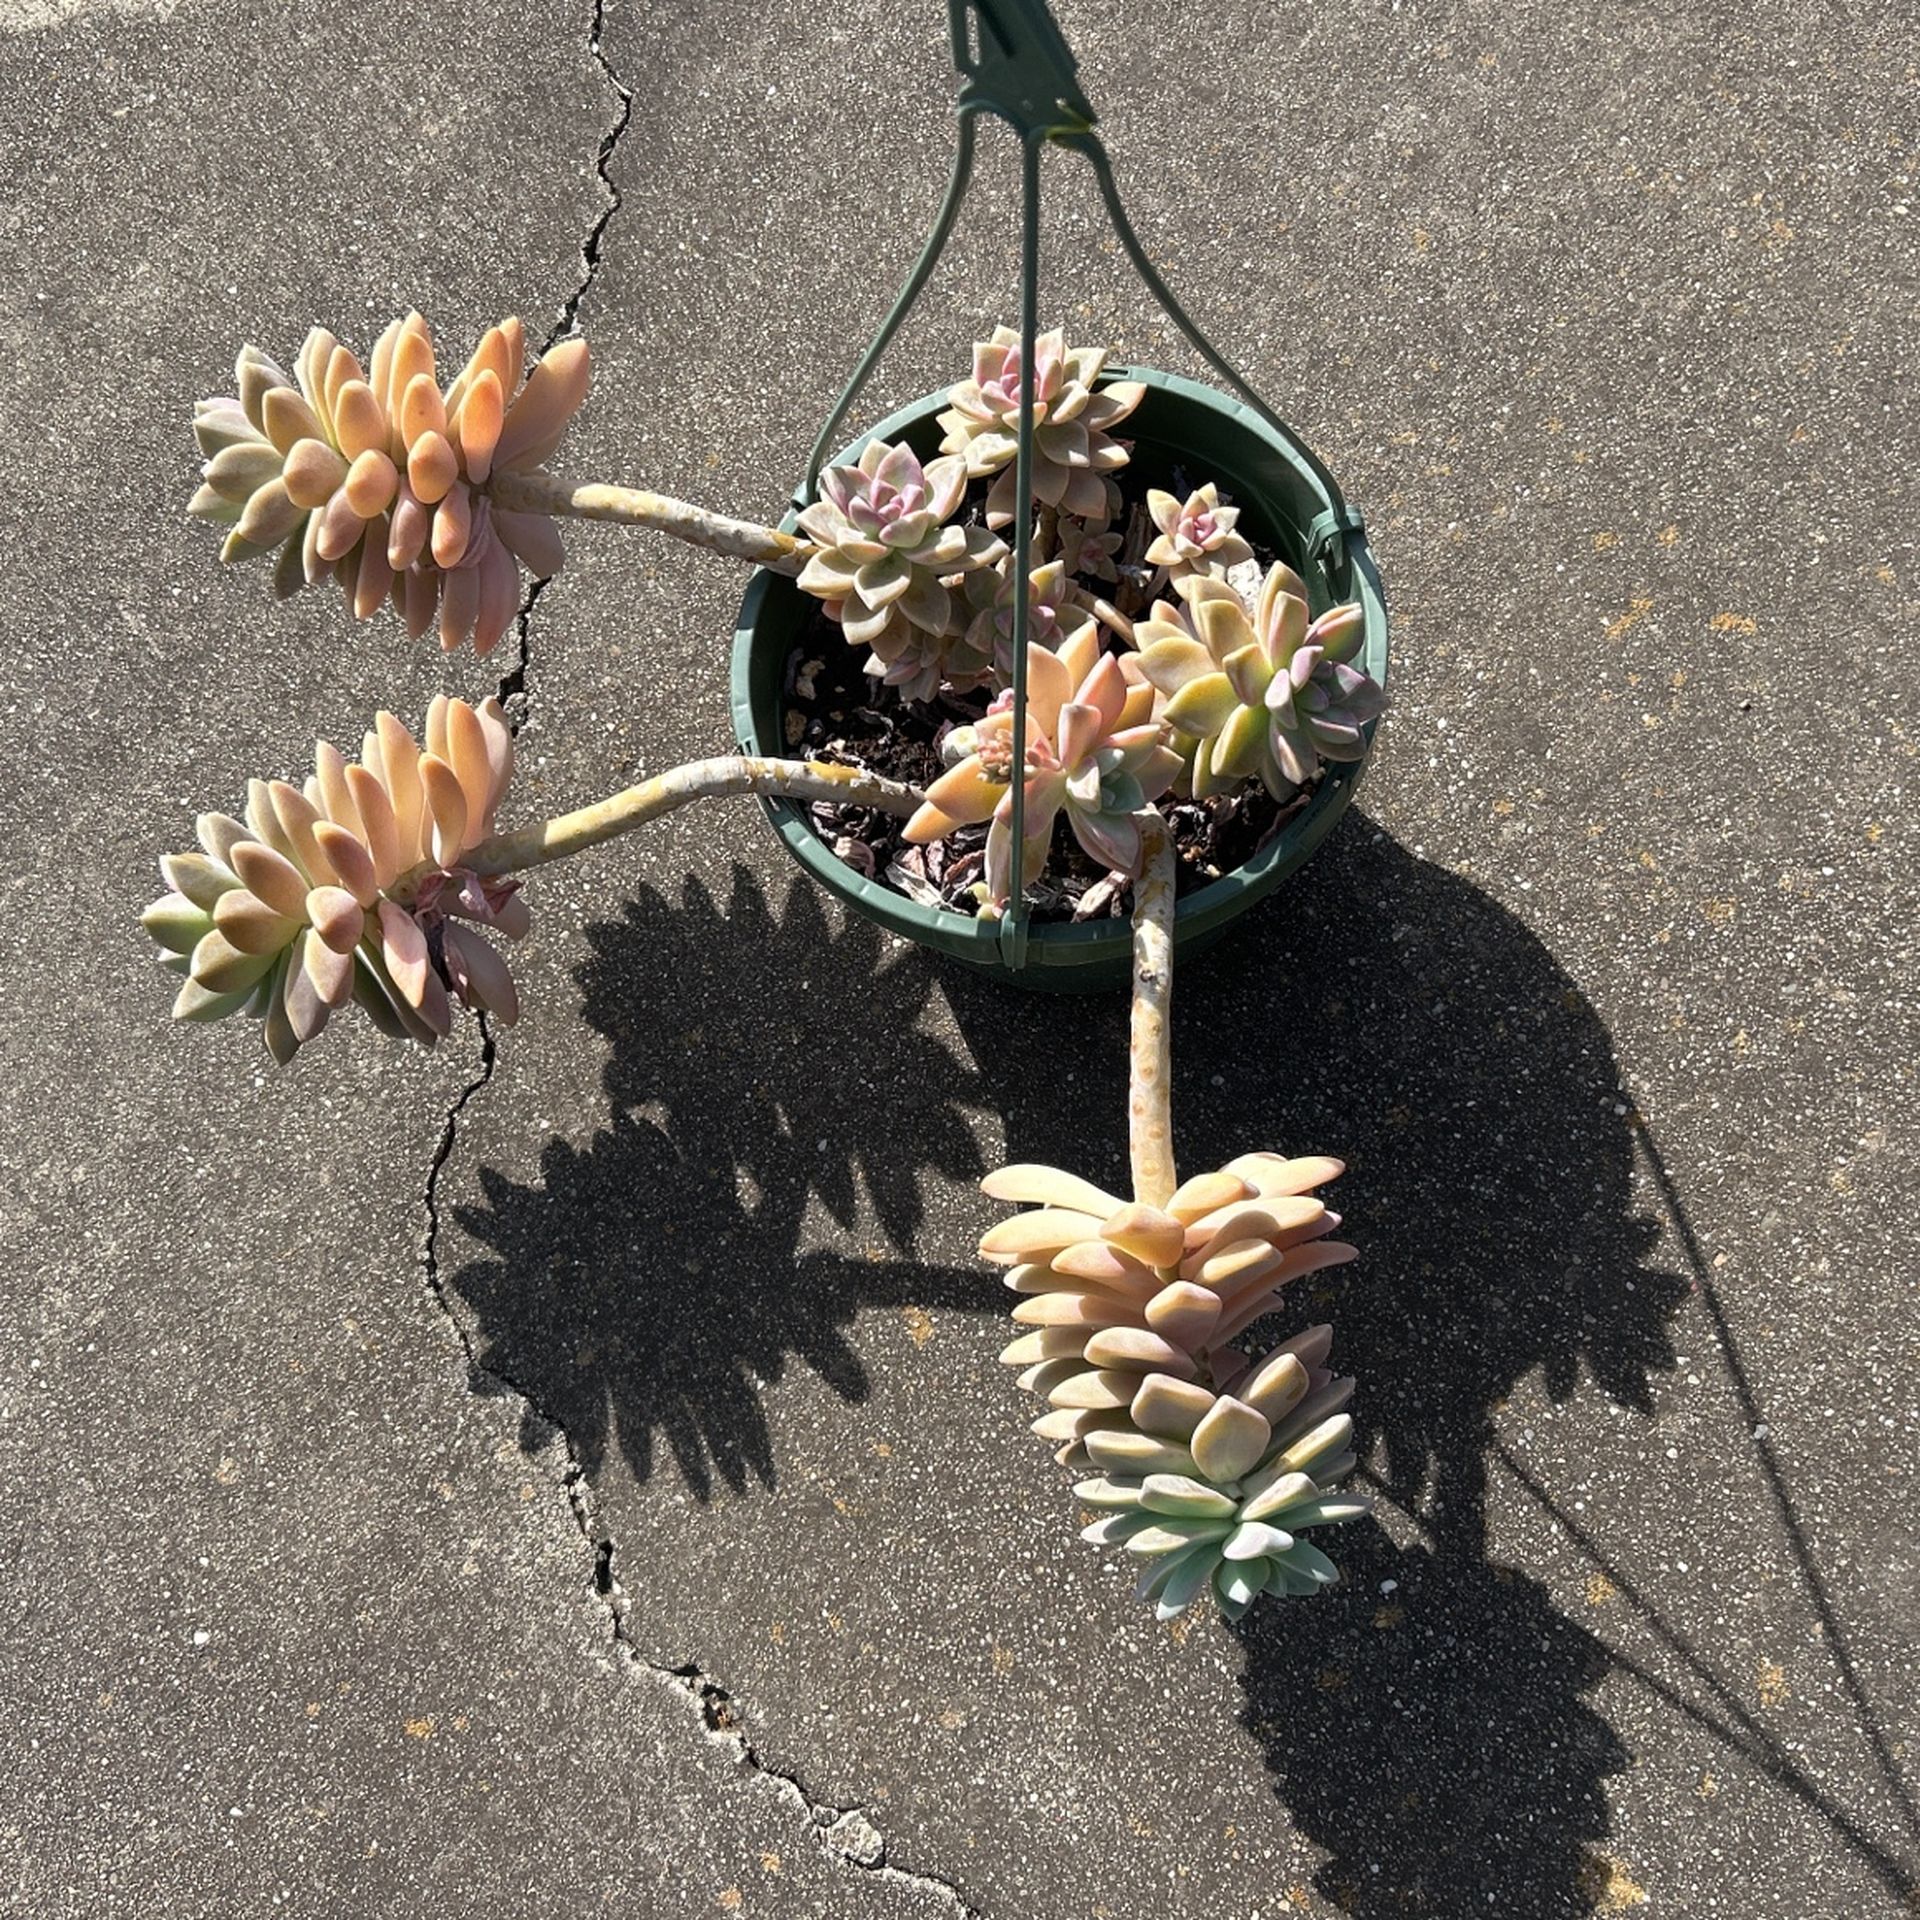 Succulent Plants Come With 8” Hanging Pots 